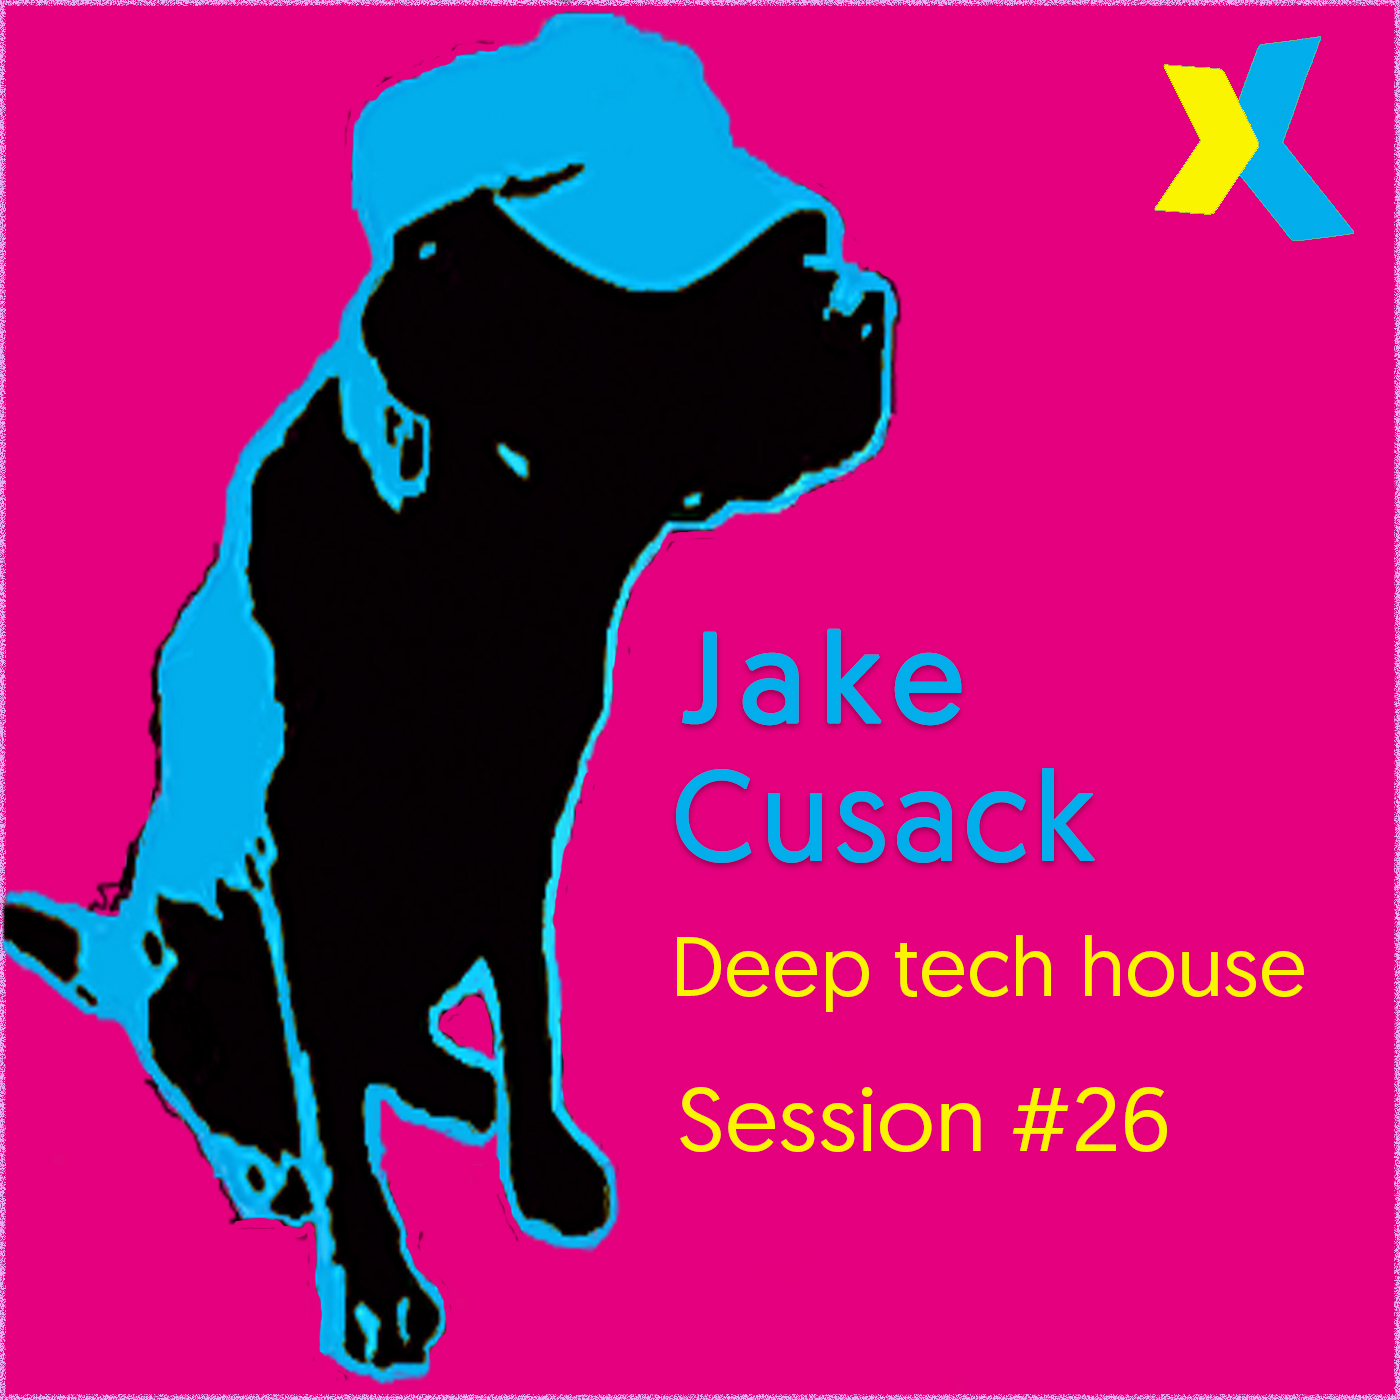 Jake Cusack - Deep tech house - Session 26